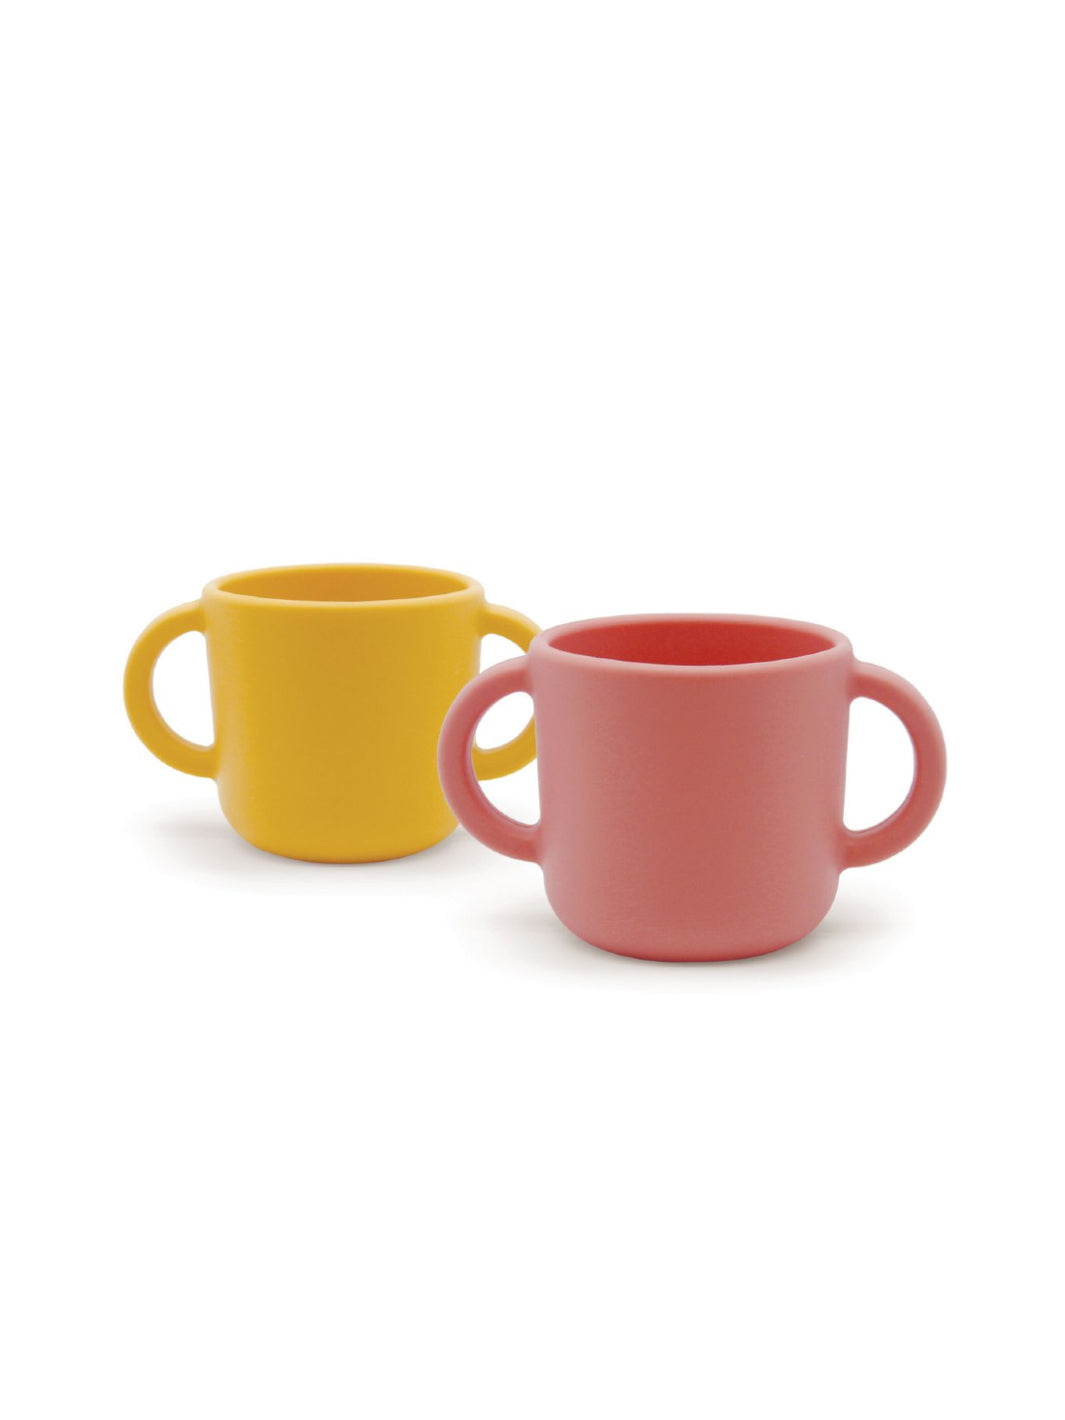 EKOBO Bambino Silicone Cup with Handles Set (2 cups)